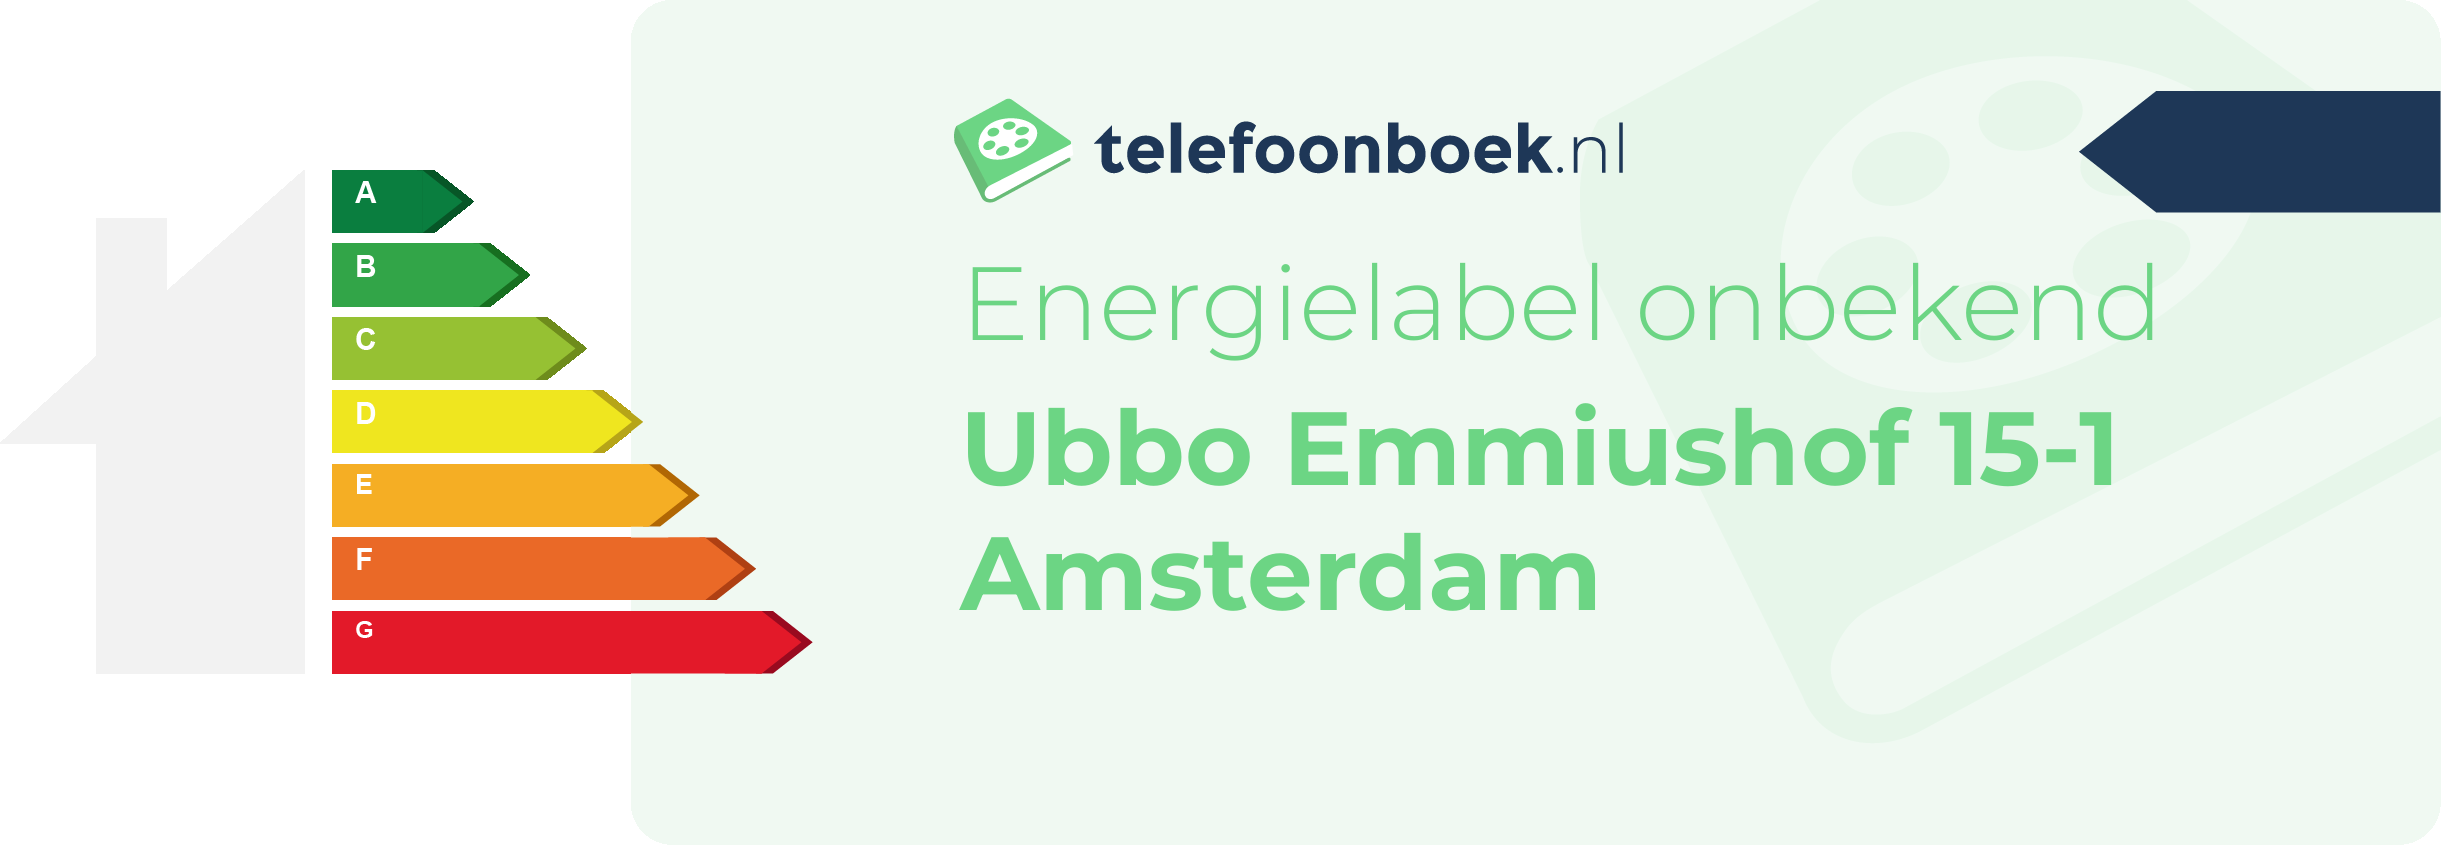 Energielabel Ubbo Emmiushof 15-1 Amsterdam